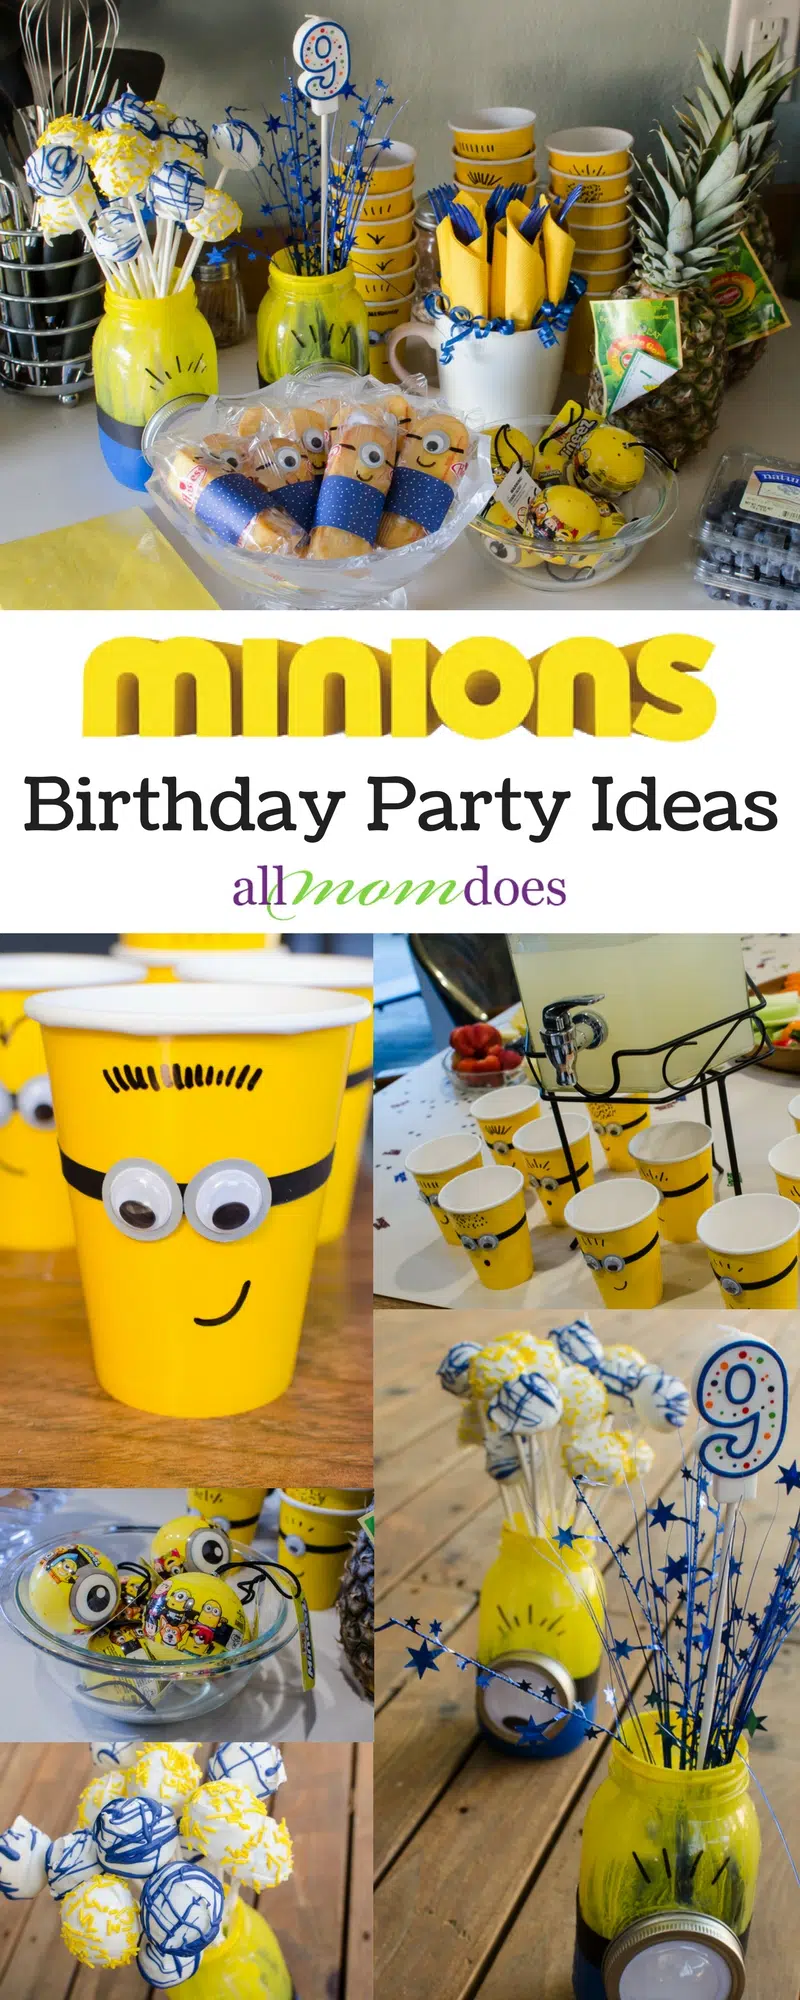 Fun & Easy Ideas for a Minions theme Birthday Party